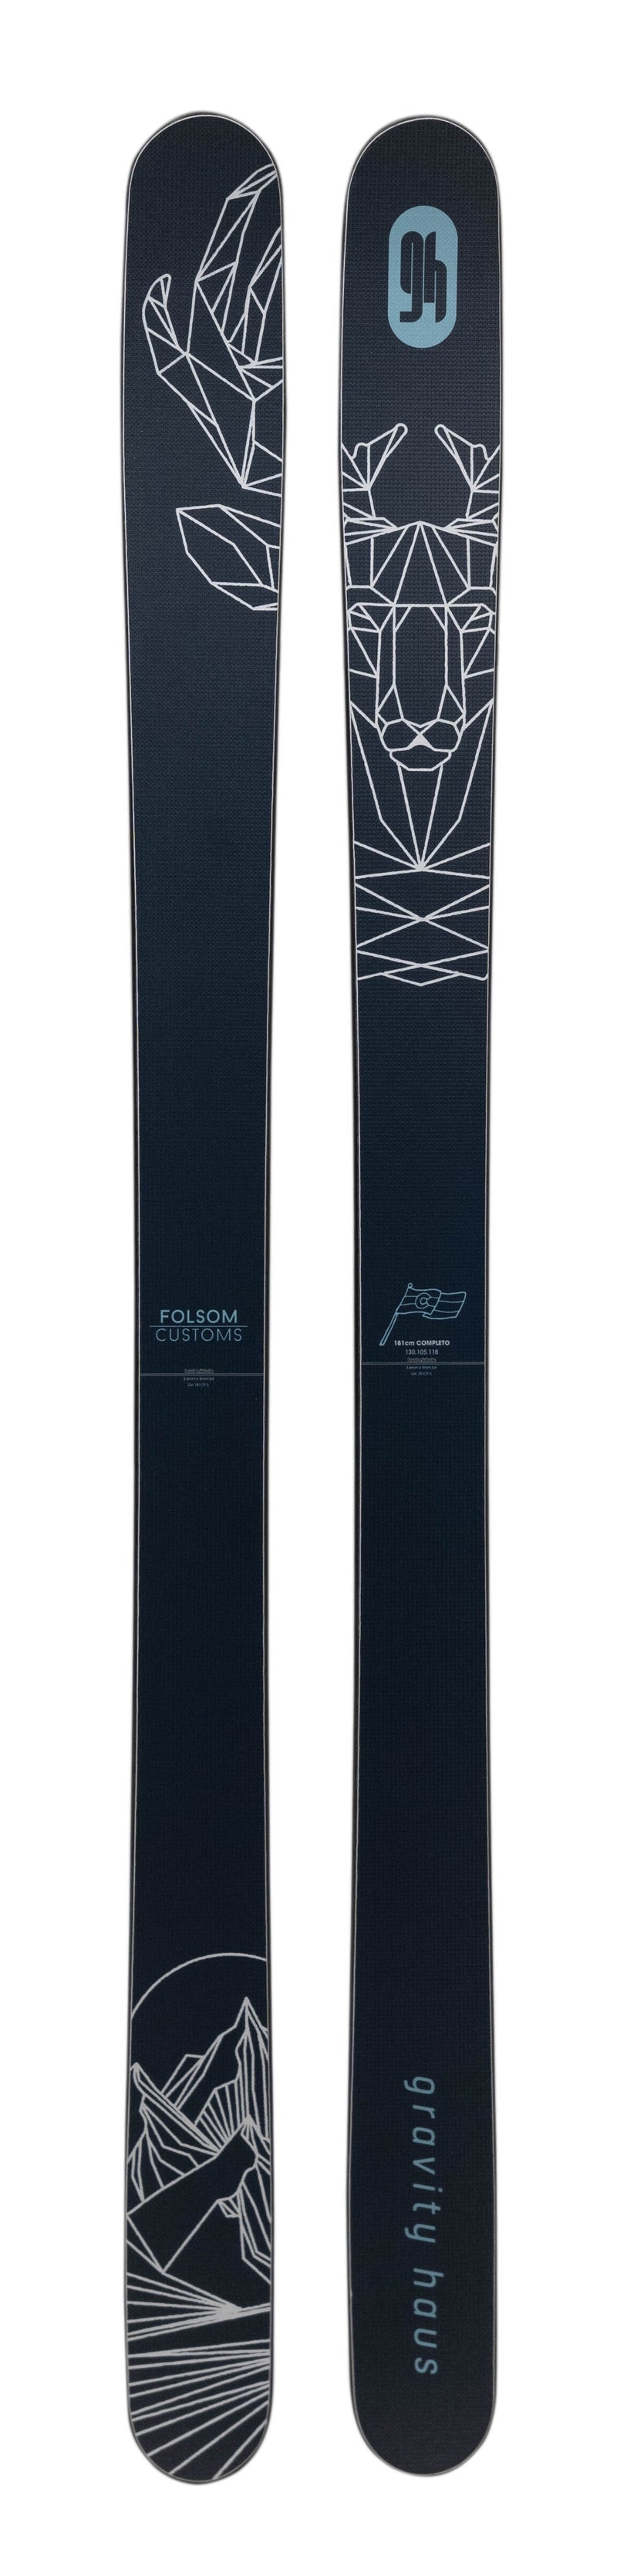 181cm Folsom Completo Skis GH Custom Design